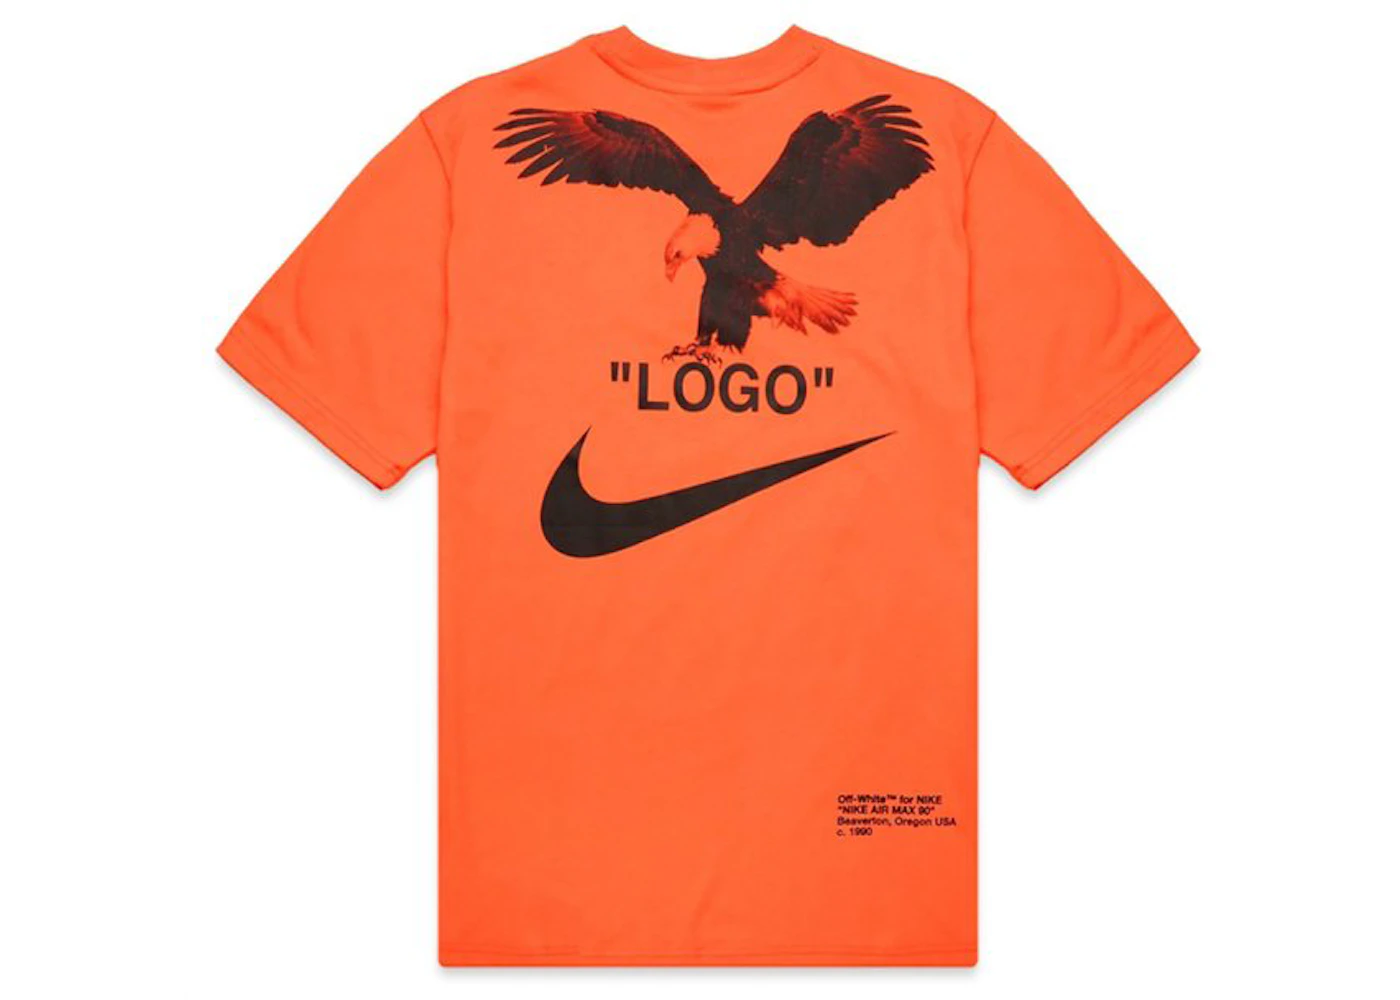 OFF-WHITE x Nike NRG A6 Tee Team Orange/Black Men's - SS19 - US